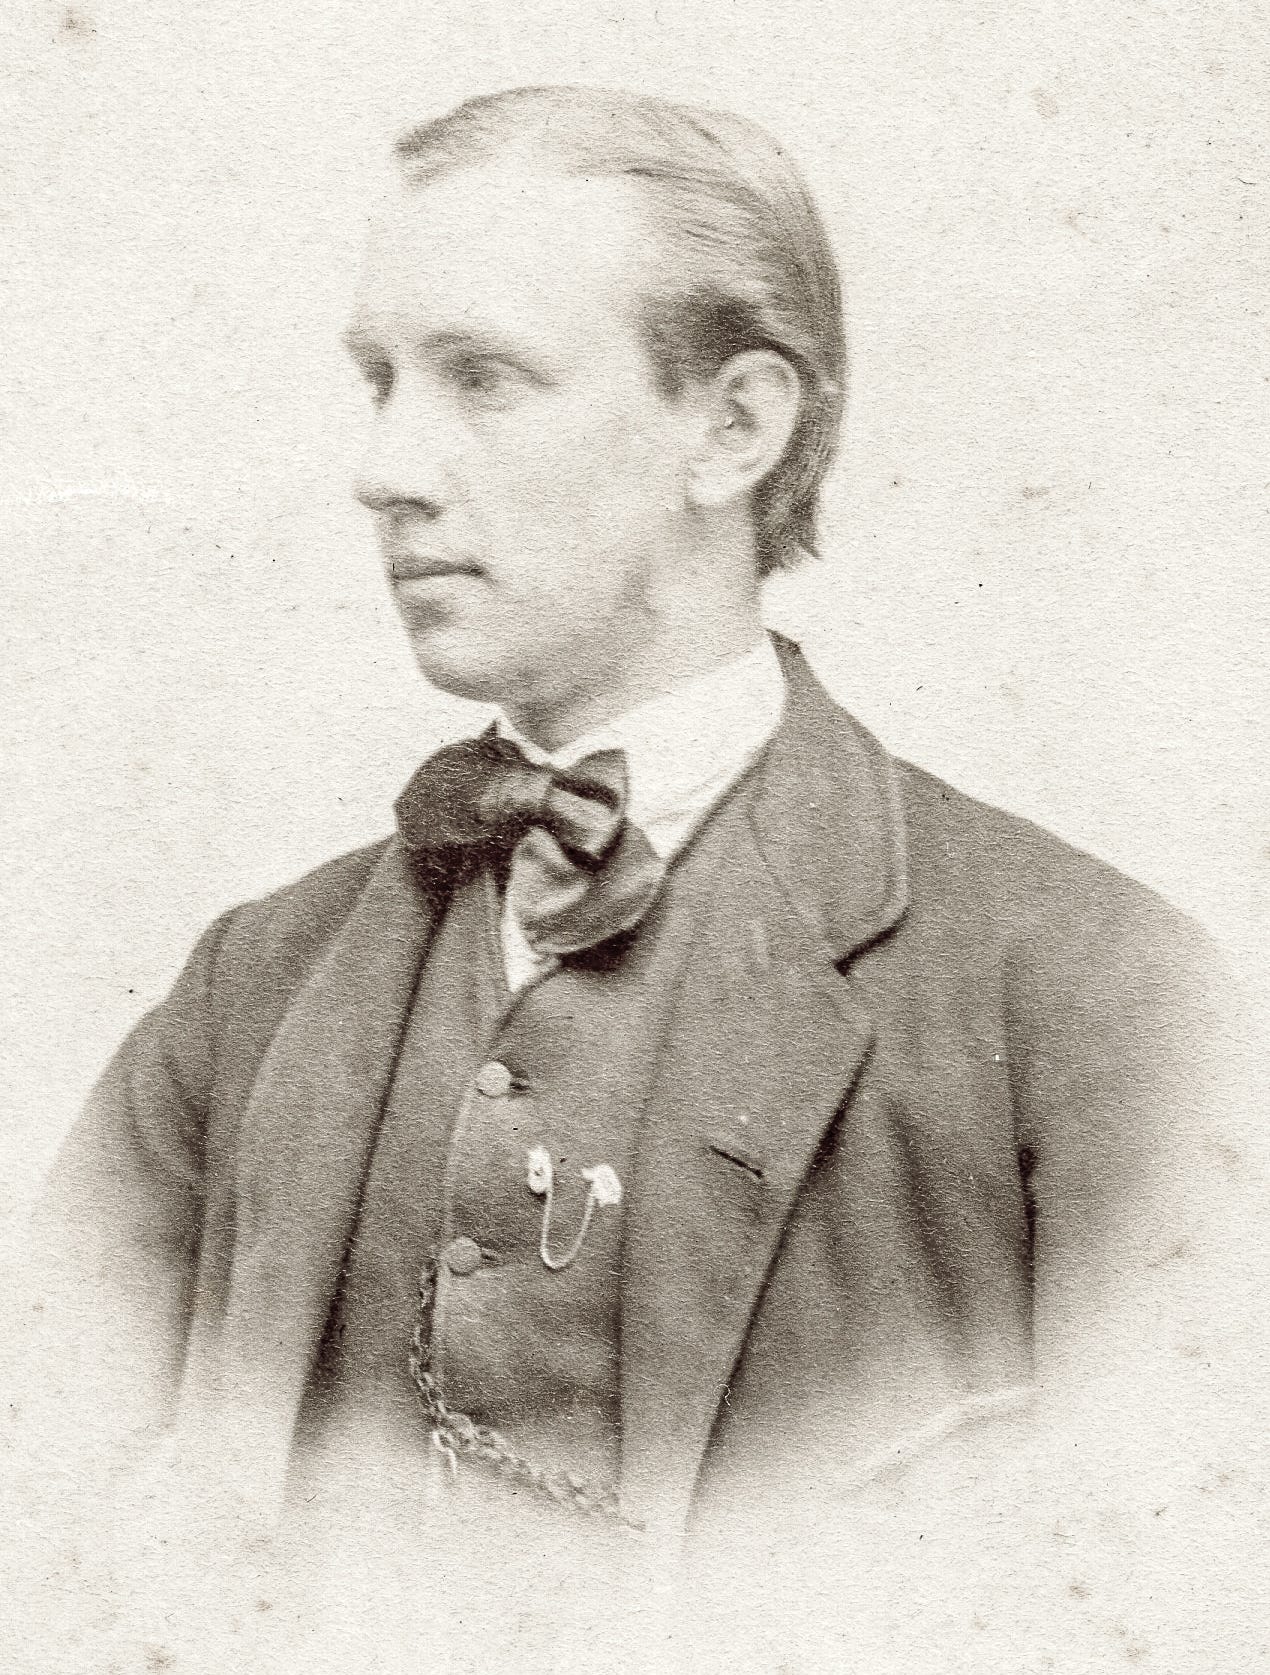 Frederic W. Jones